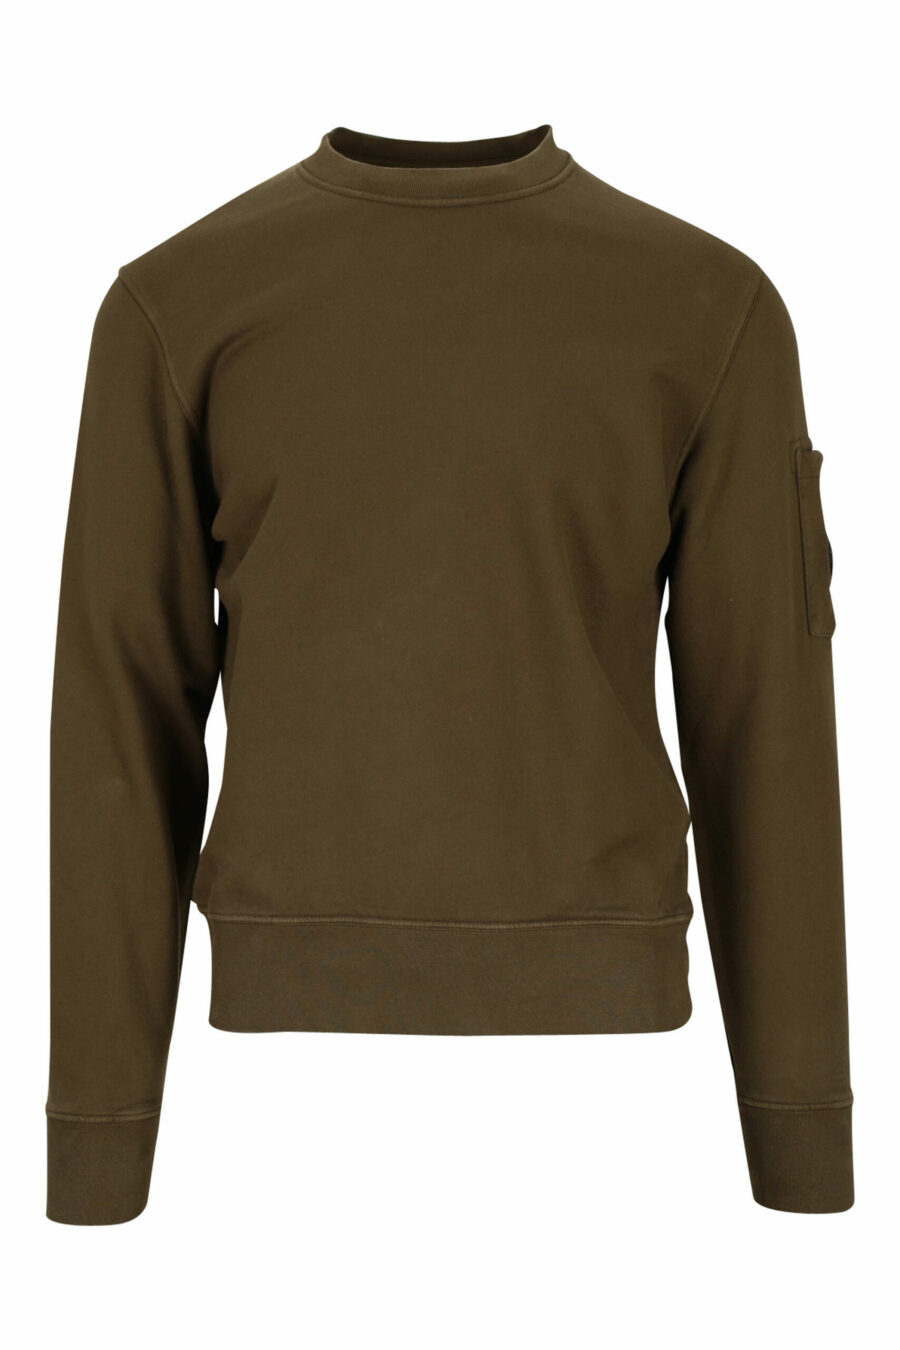 Sweat-shirt vert militaire avec logo latéral - 7620943598582 scaled